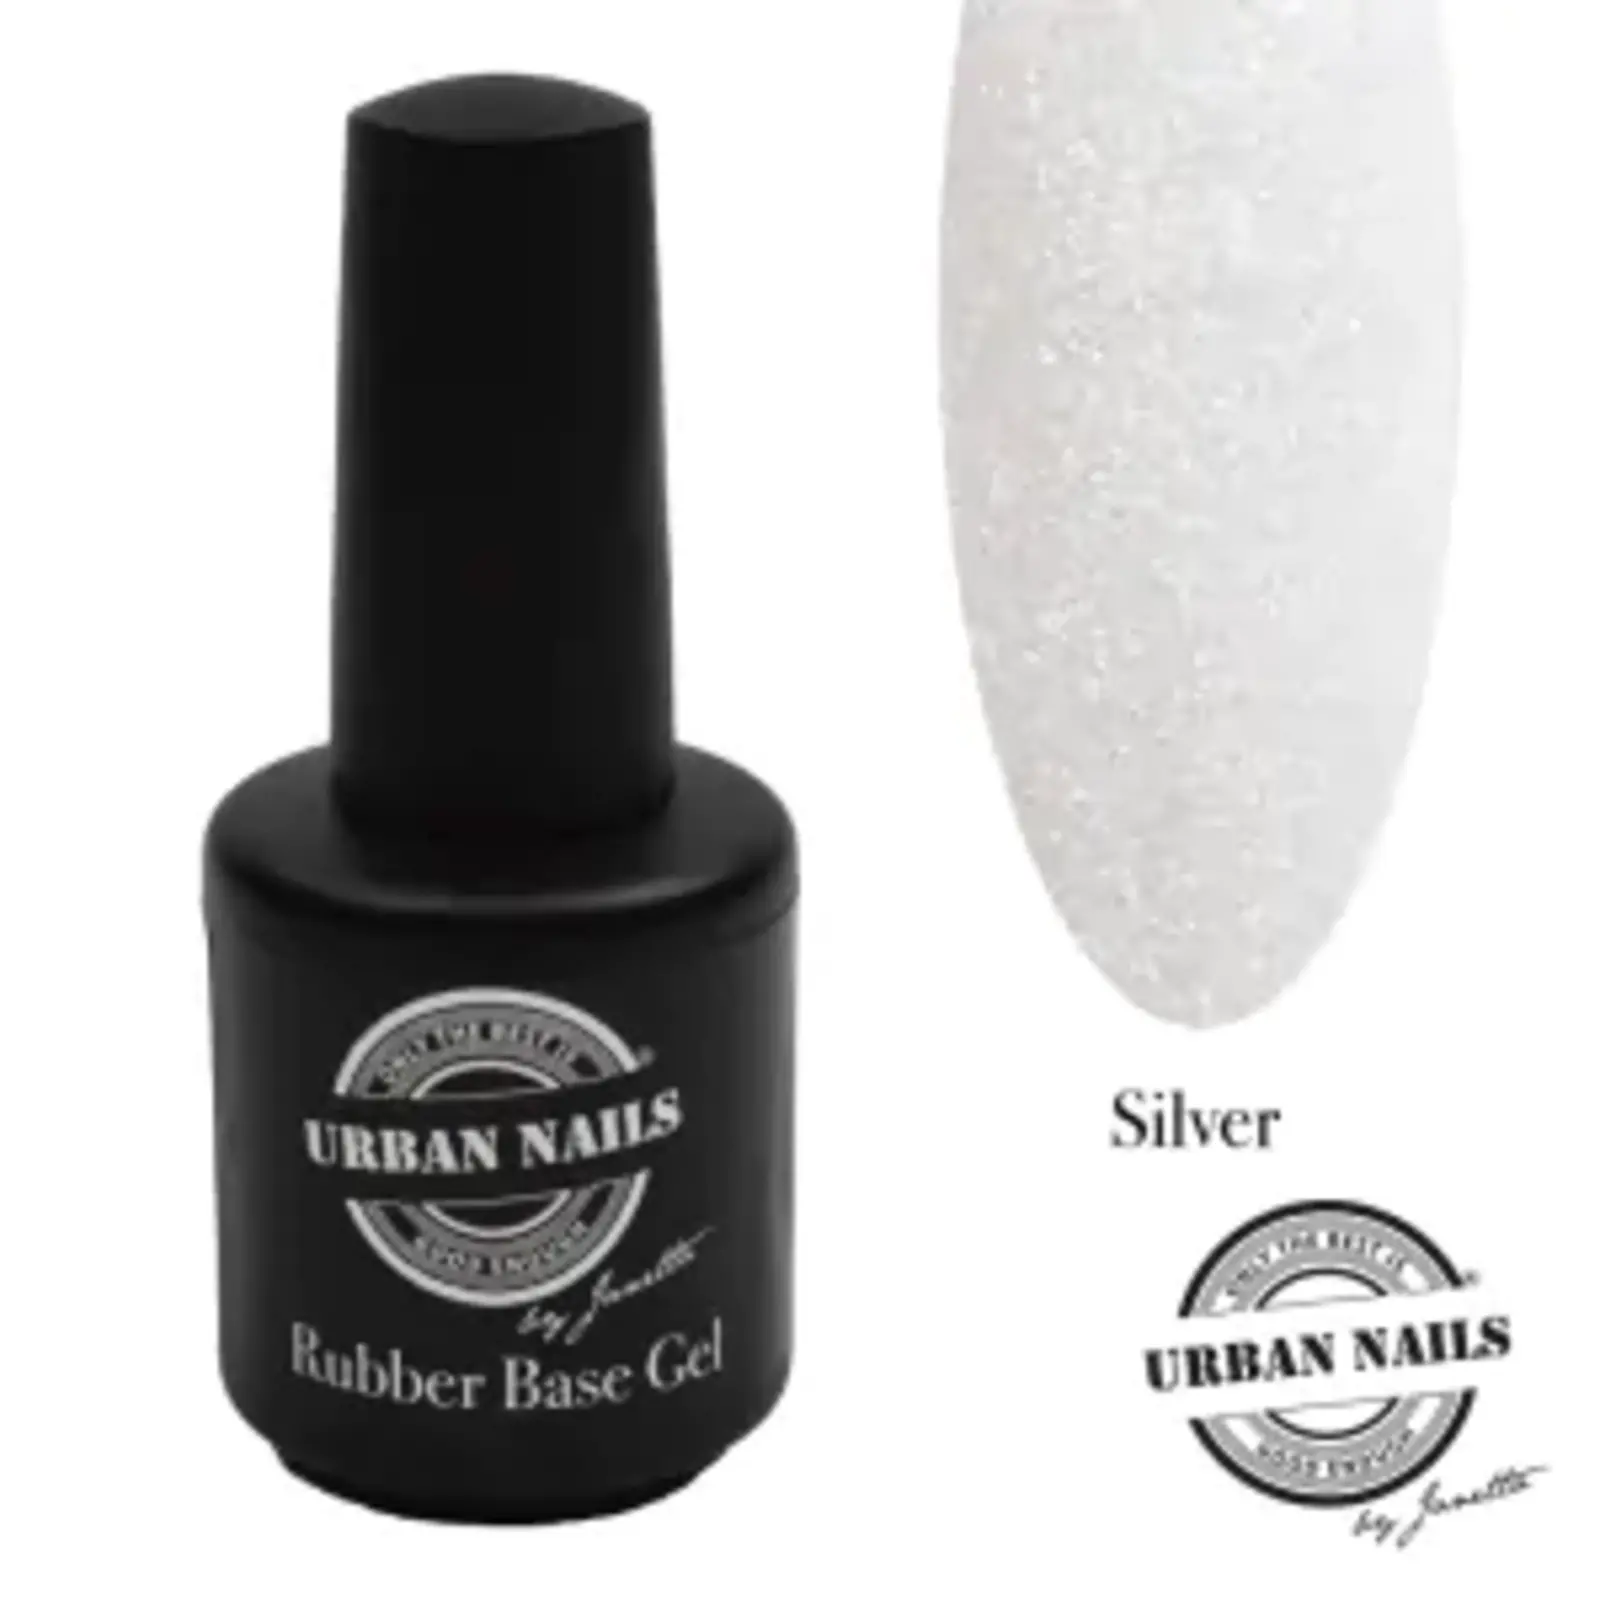 Urban nails Rubber Base Gel Silver